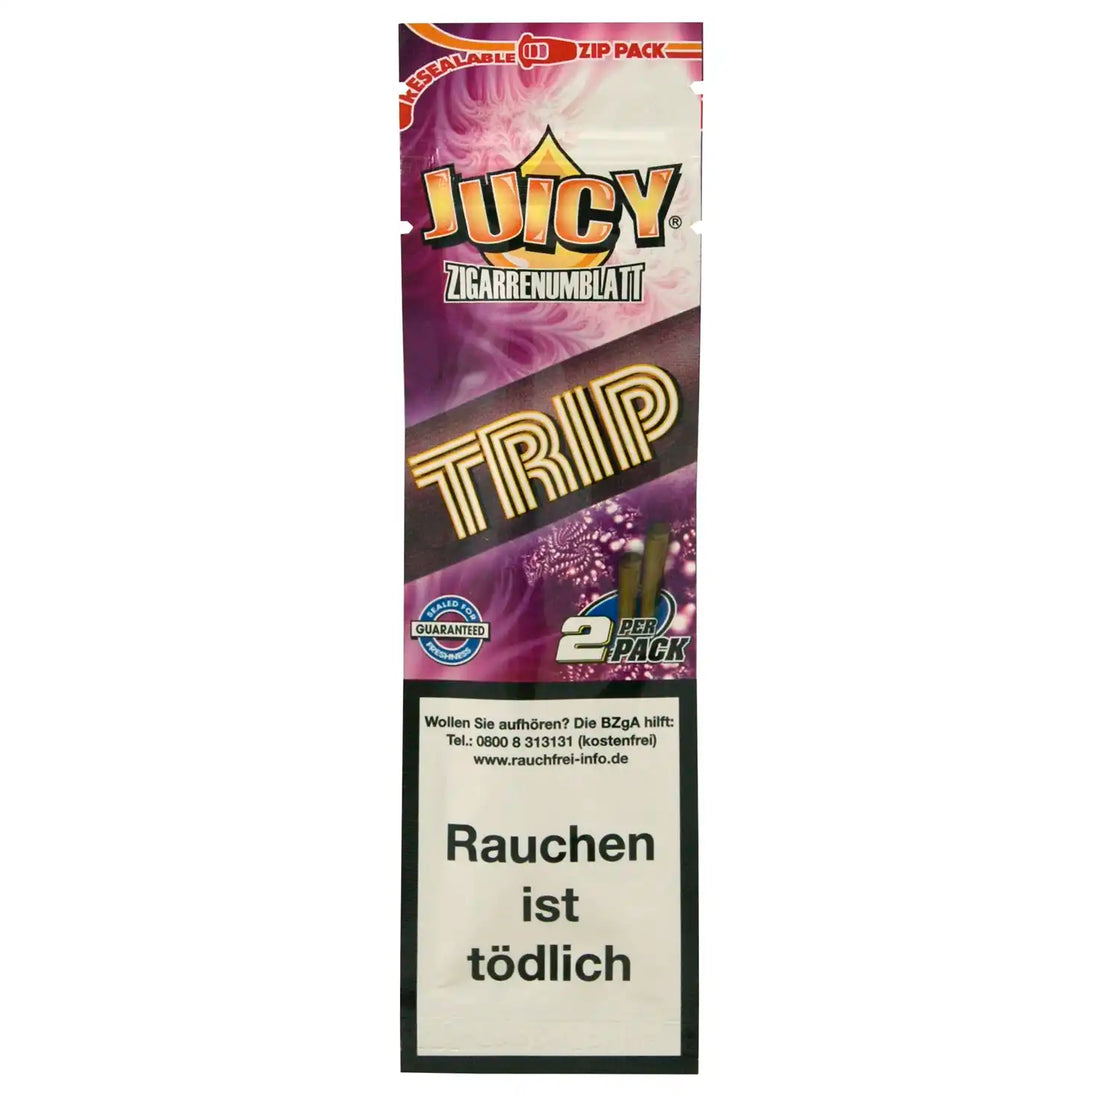 Juicy Blunt Rolls Trip